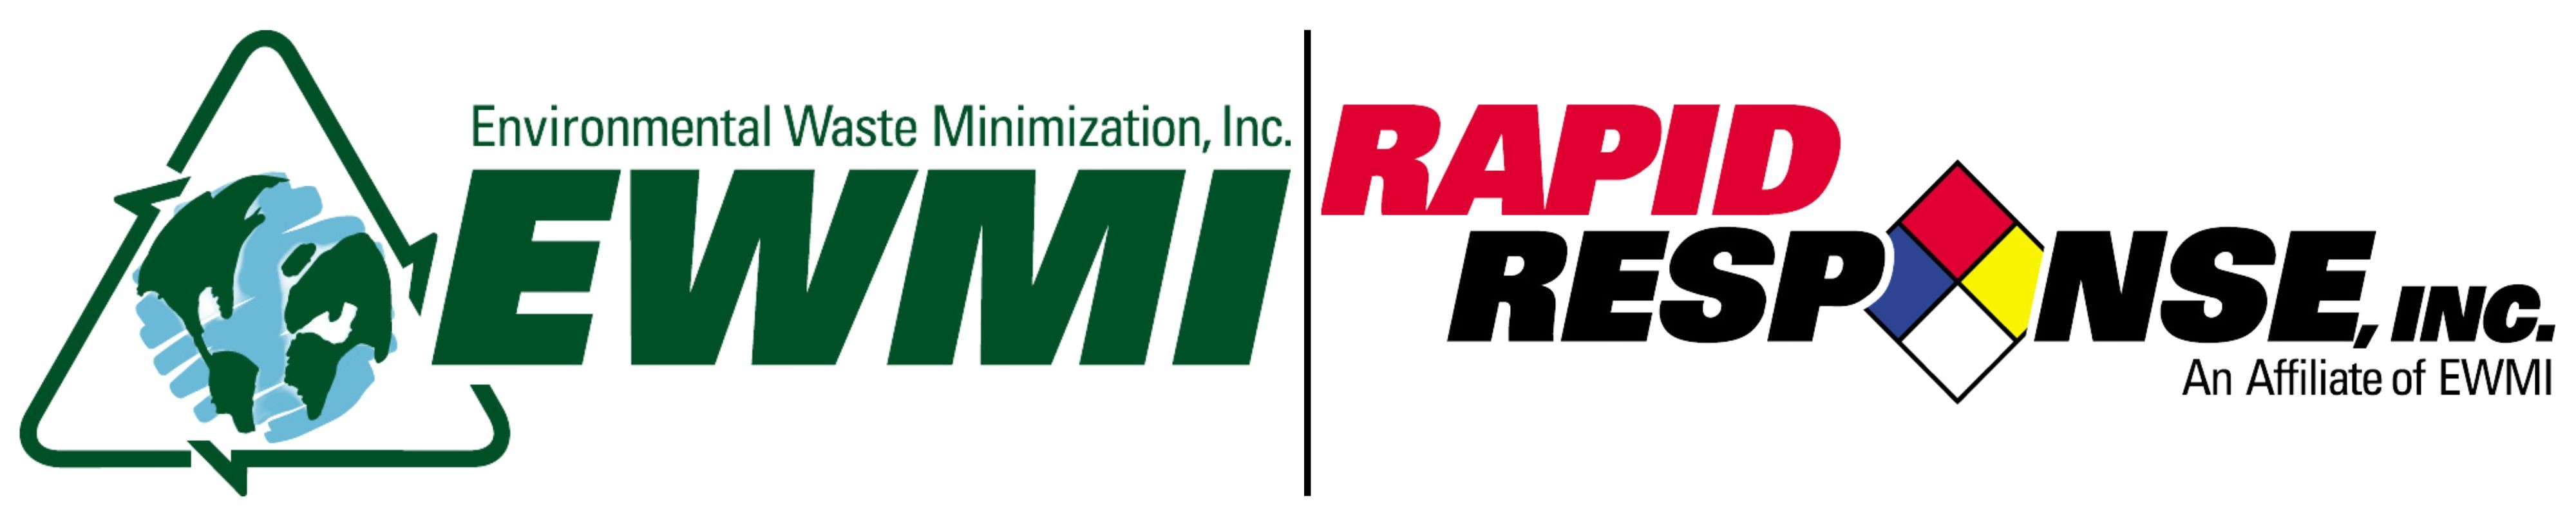 Environmental Waste Minimization Inc logo